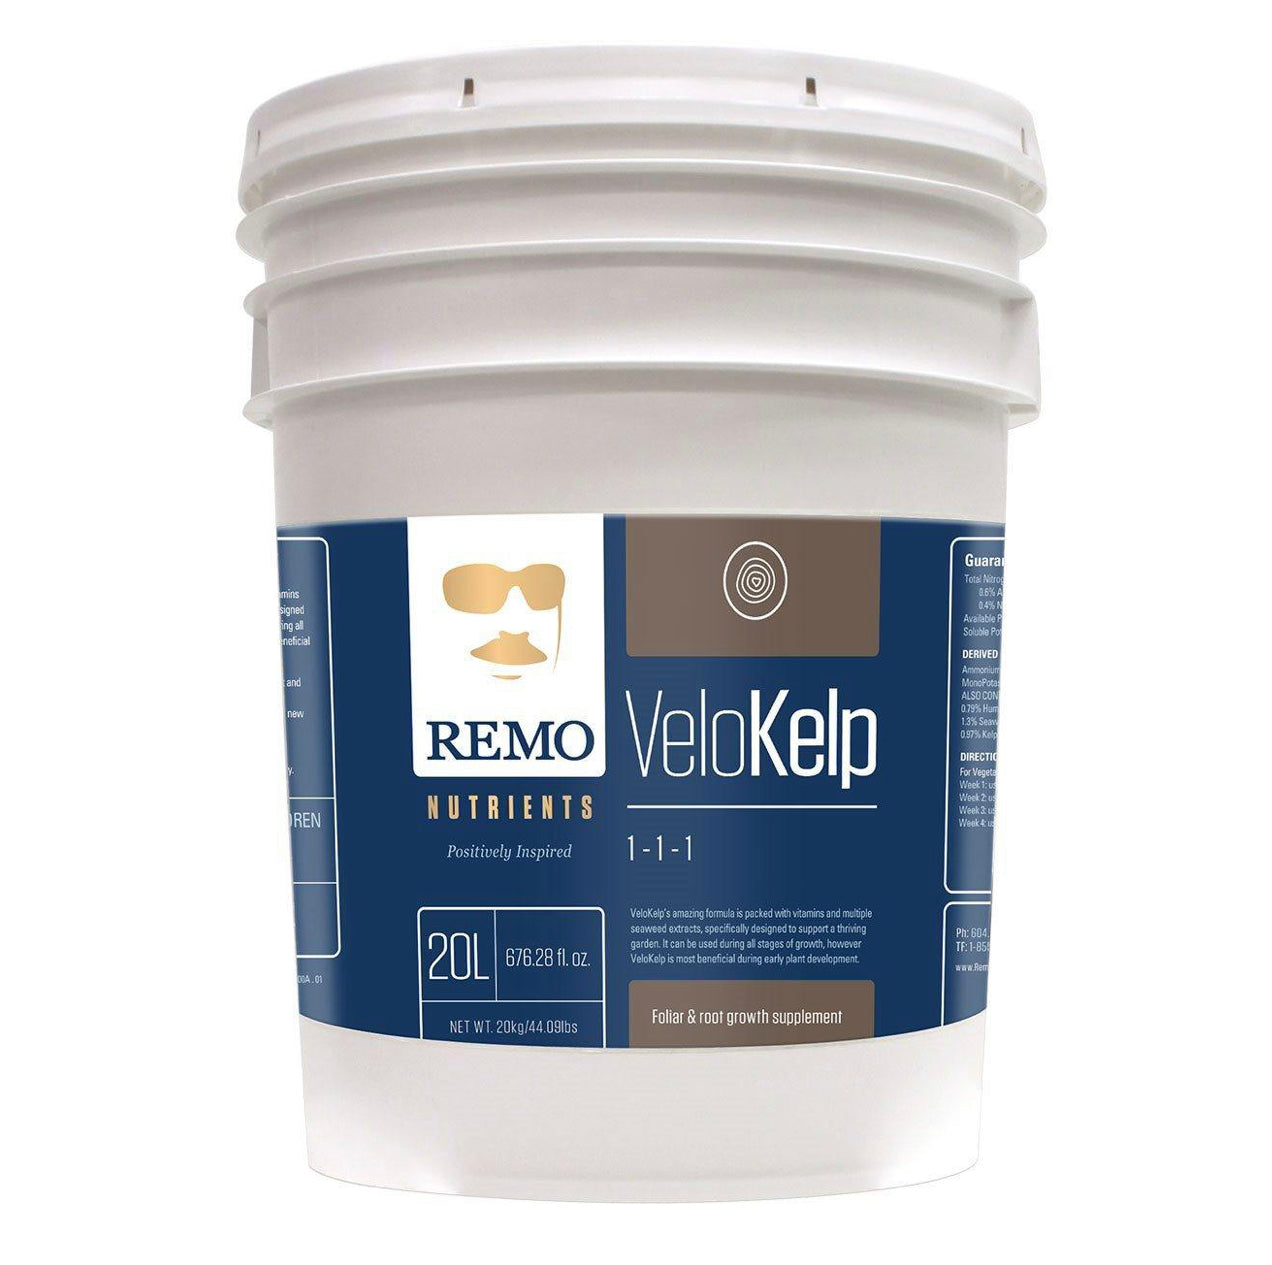 Remo Nutrients VeloKelp (1-1-1)